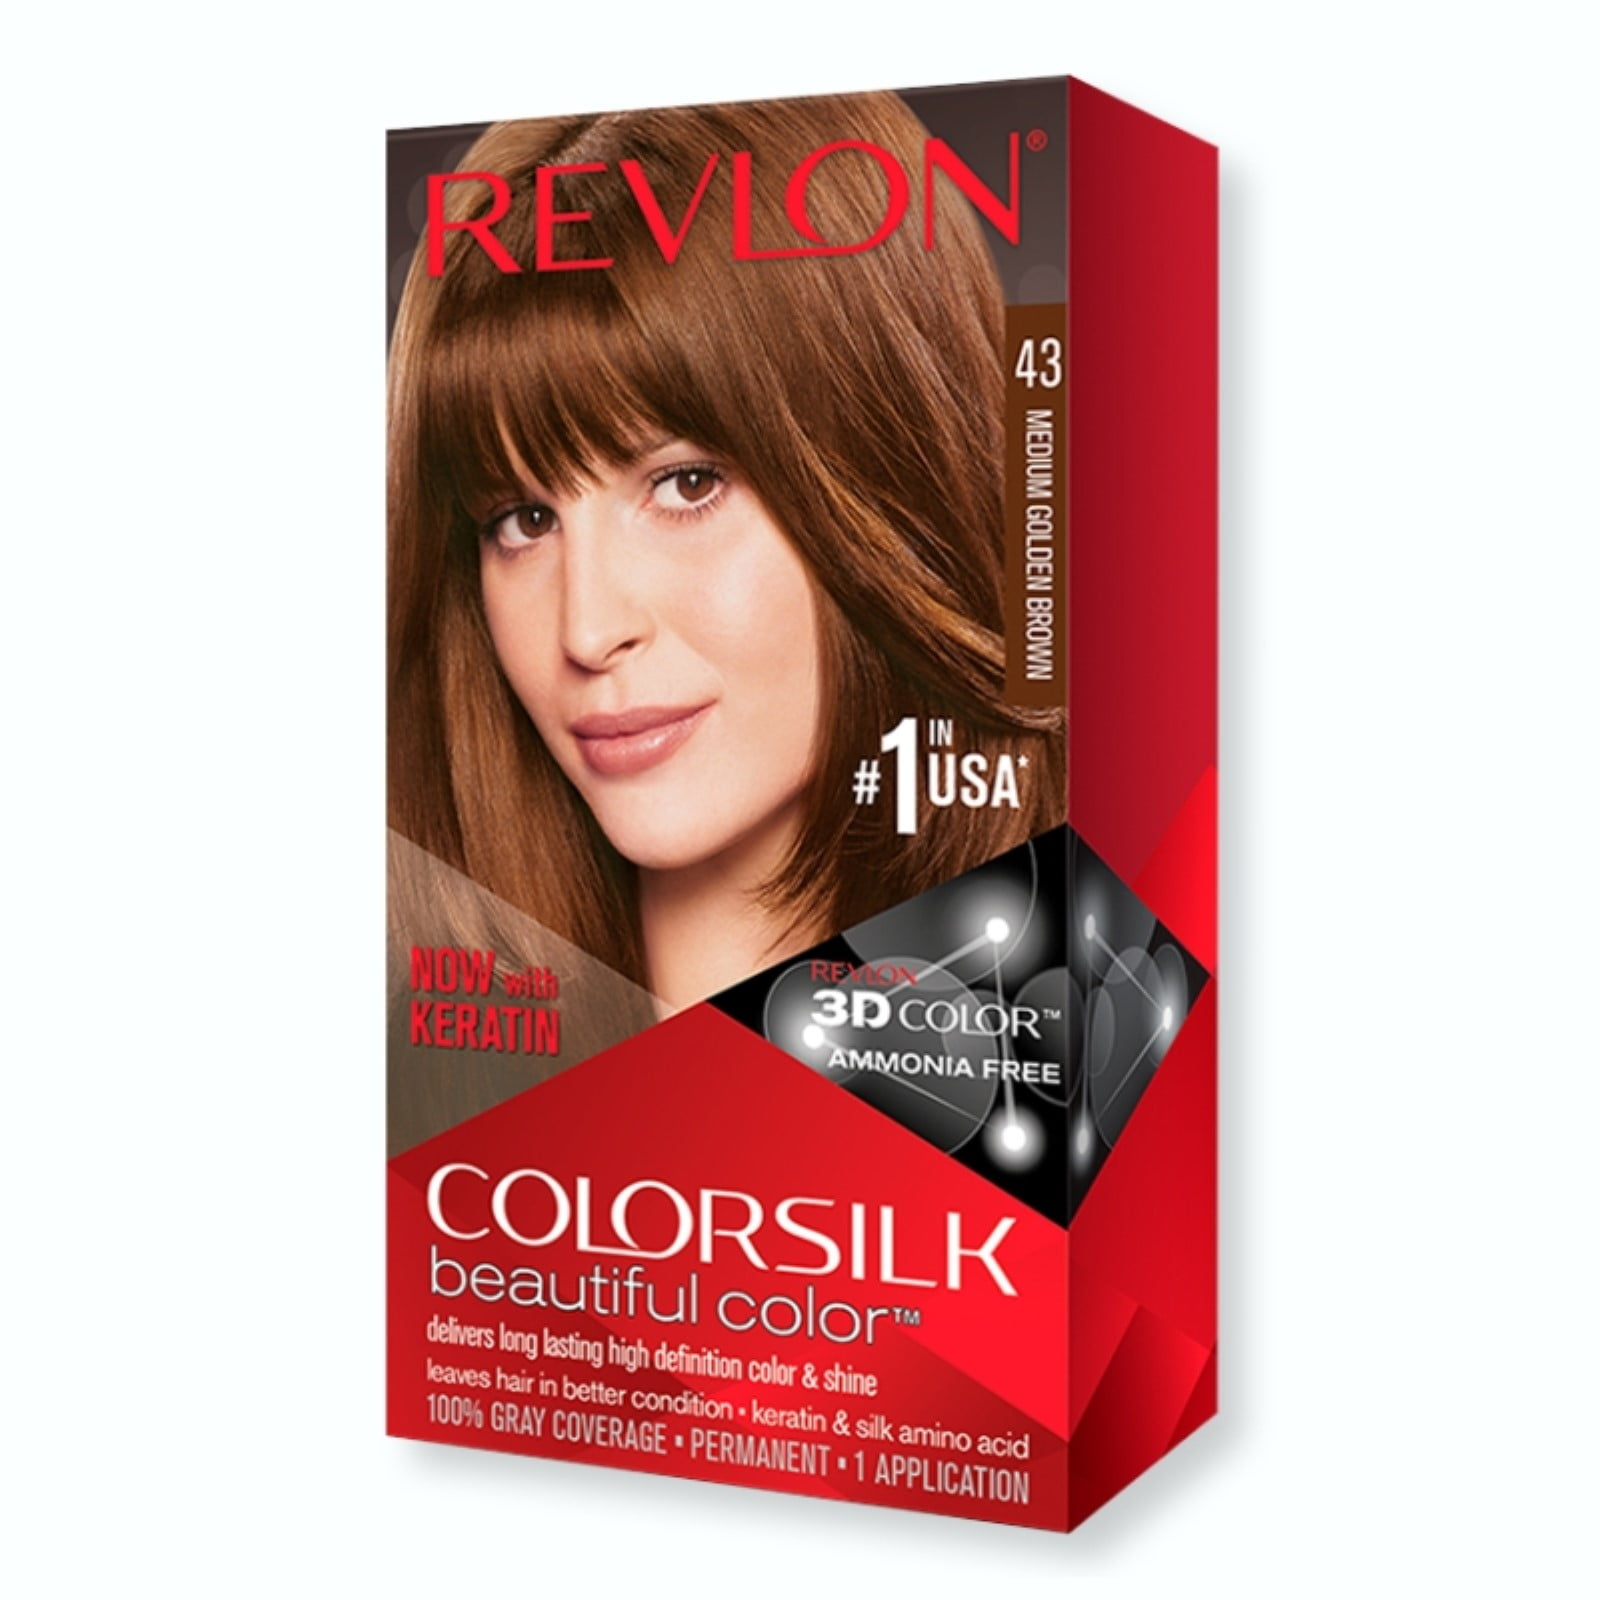 Revlon Colorsilk Hair Color, [43] Medium Golden Brown, 1 Each, 4 Pack -  